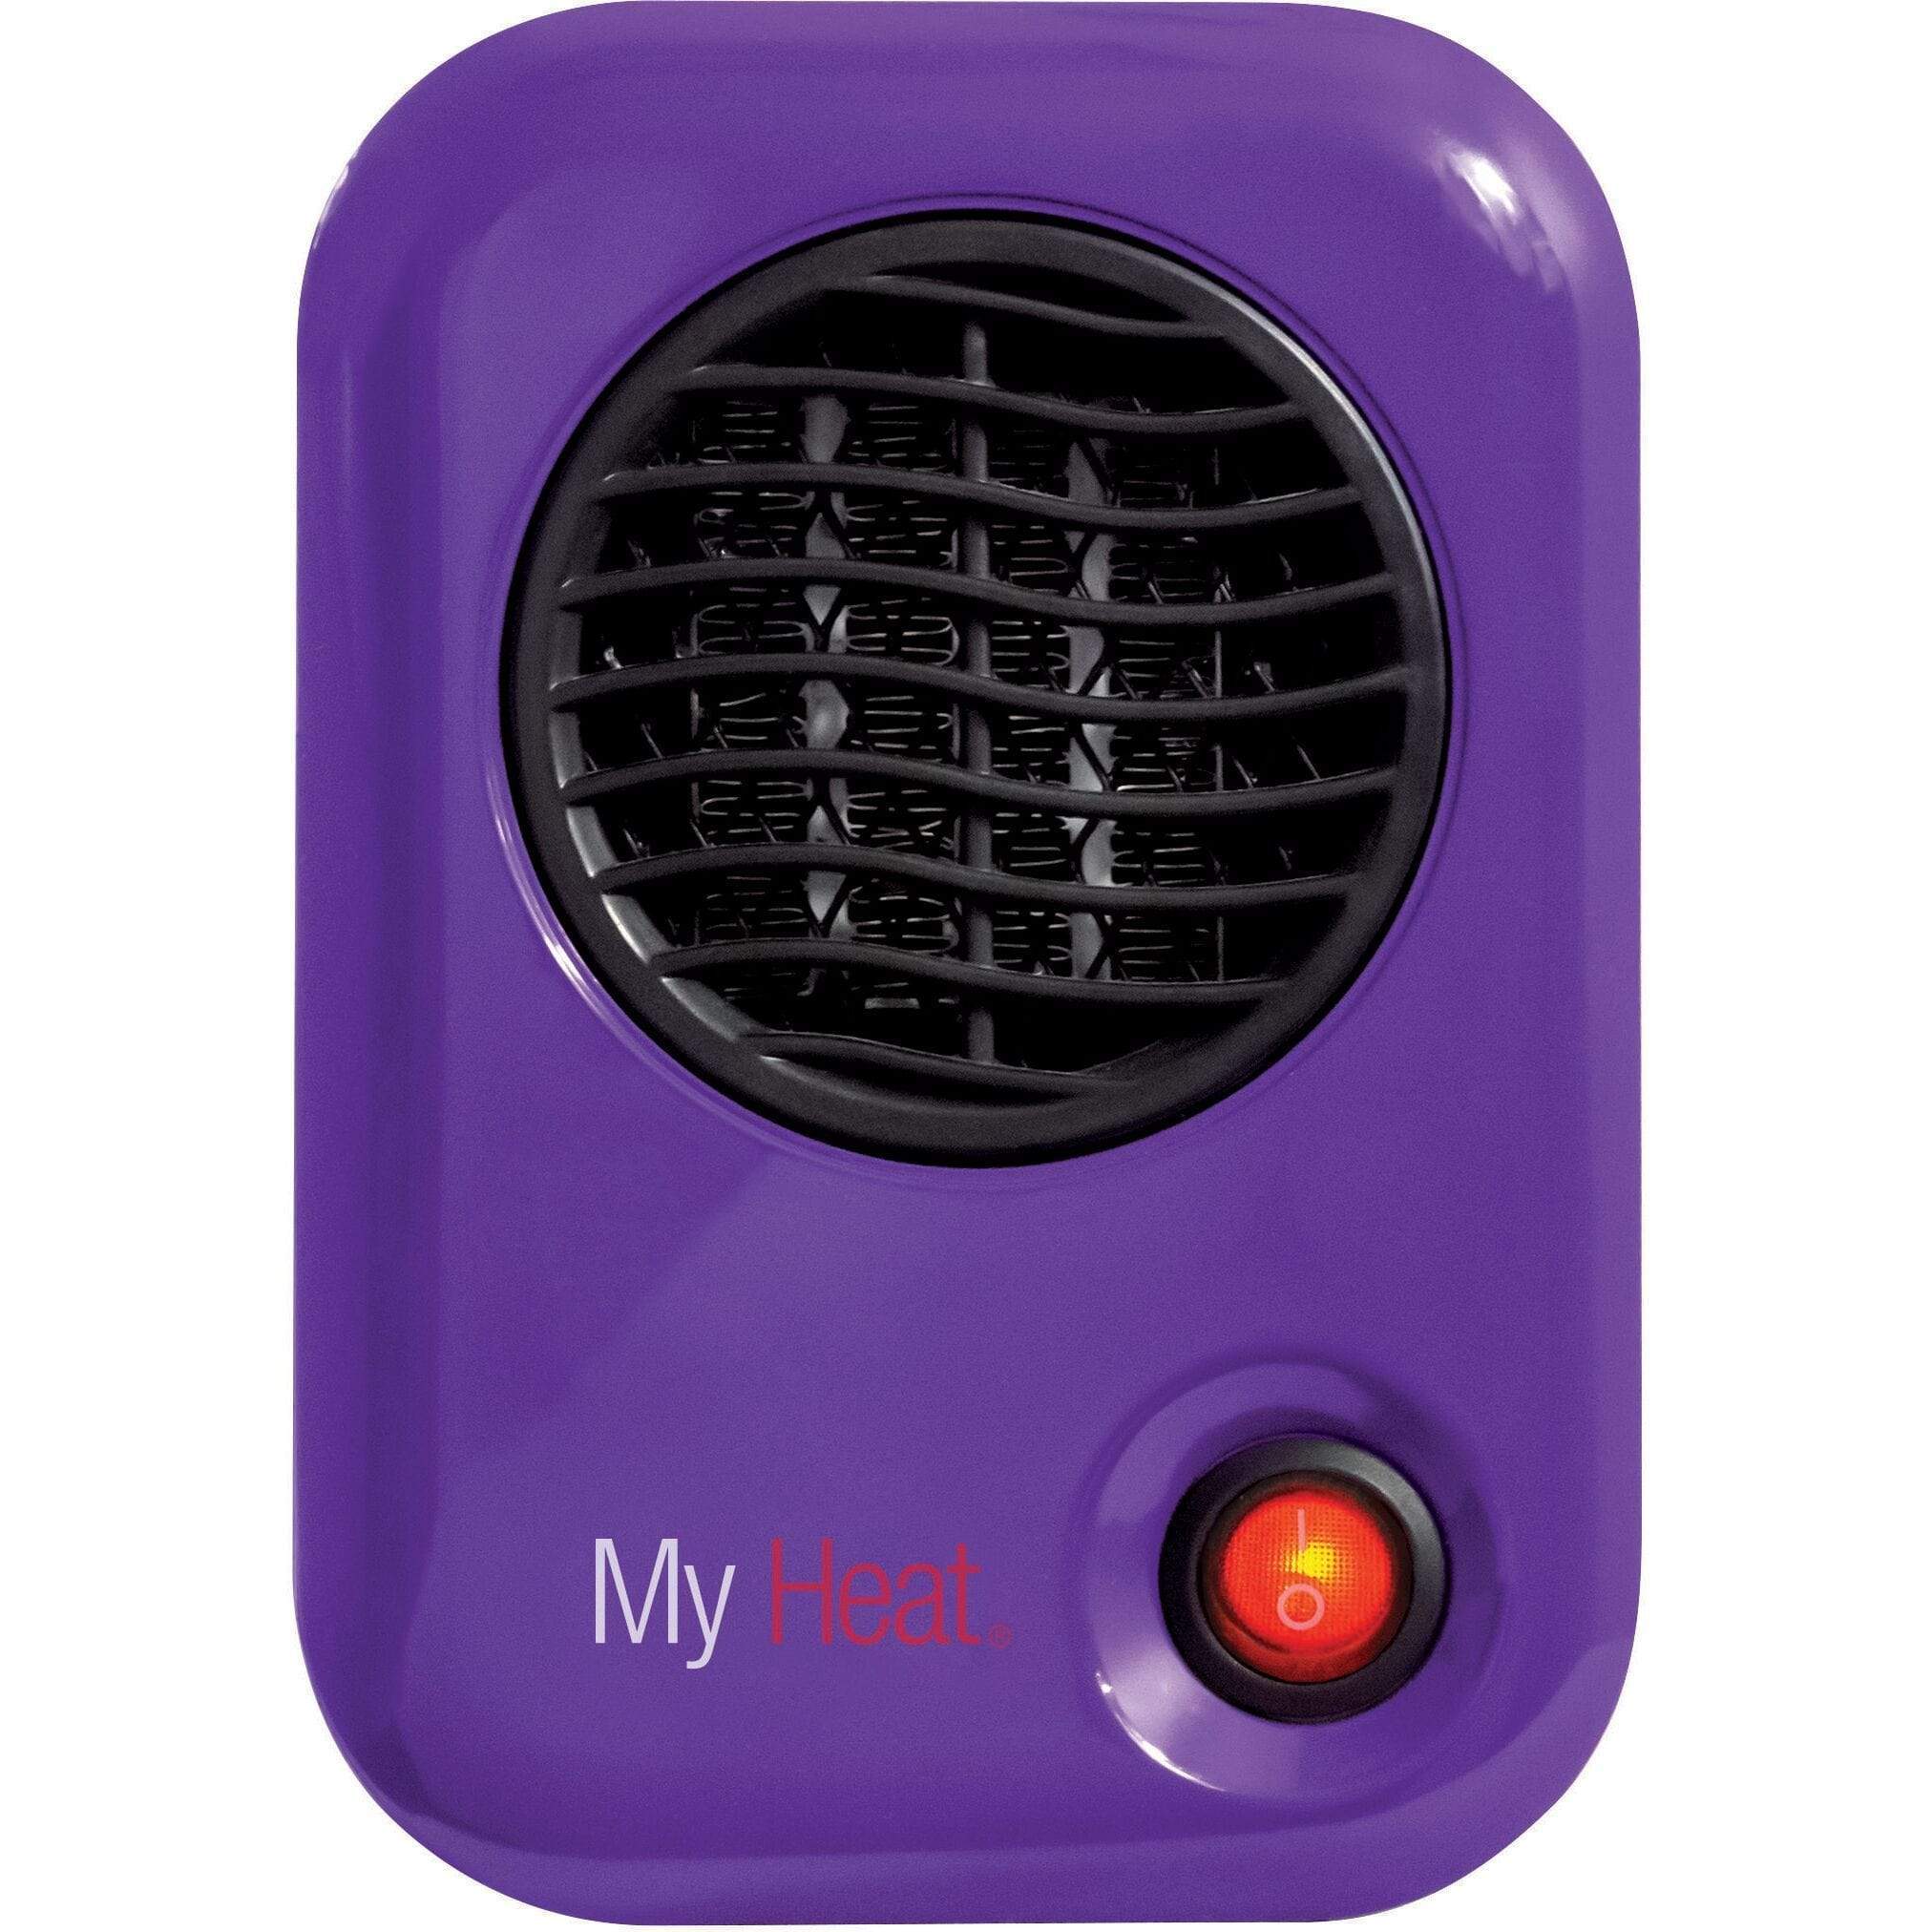 Lasko Ceramic Heater Lasko MyHeat 200W Personal Ceramic Heater, Purple